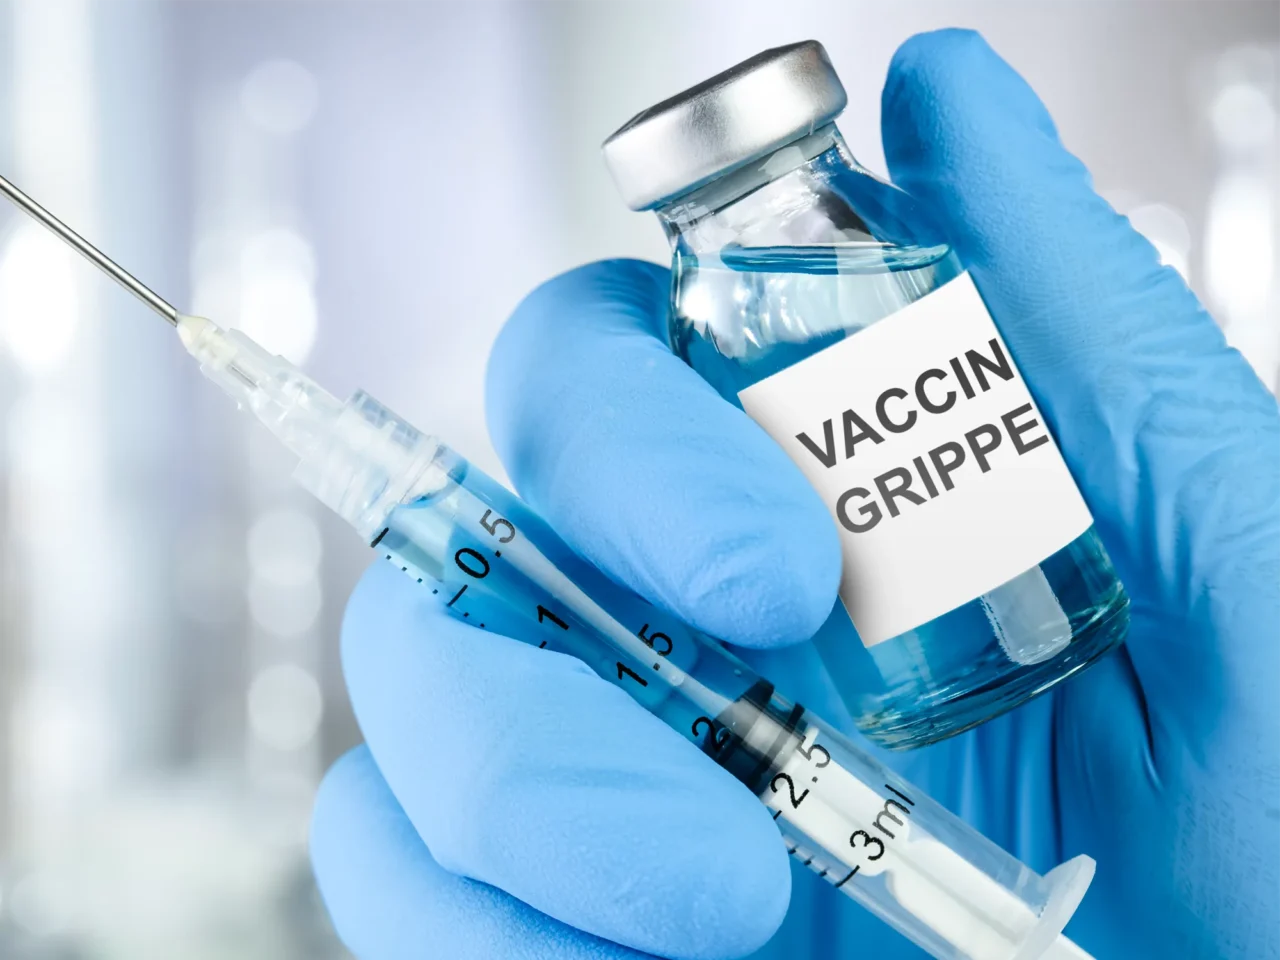 https://blog.workinpharma.fr/wp-content/uploads/2022/10/vaccin-grippe-adobestock-327257834-leigh-prather.png-1280x960.webp